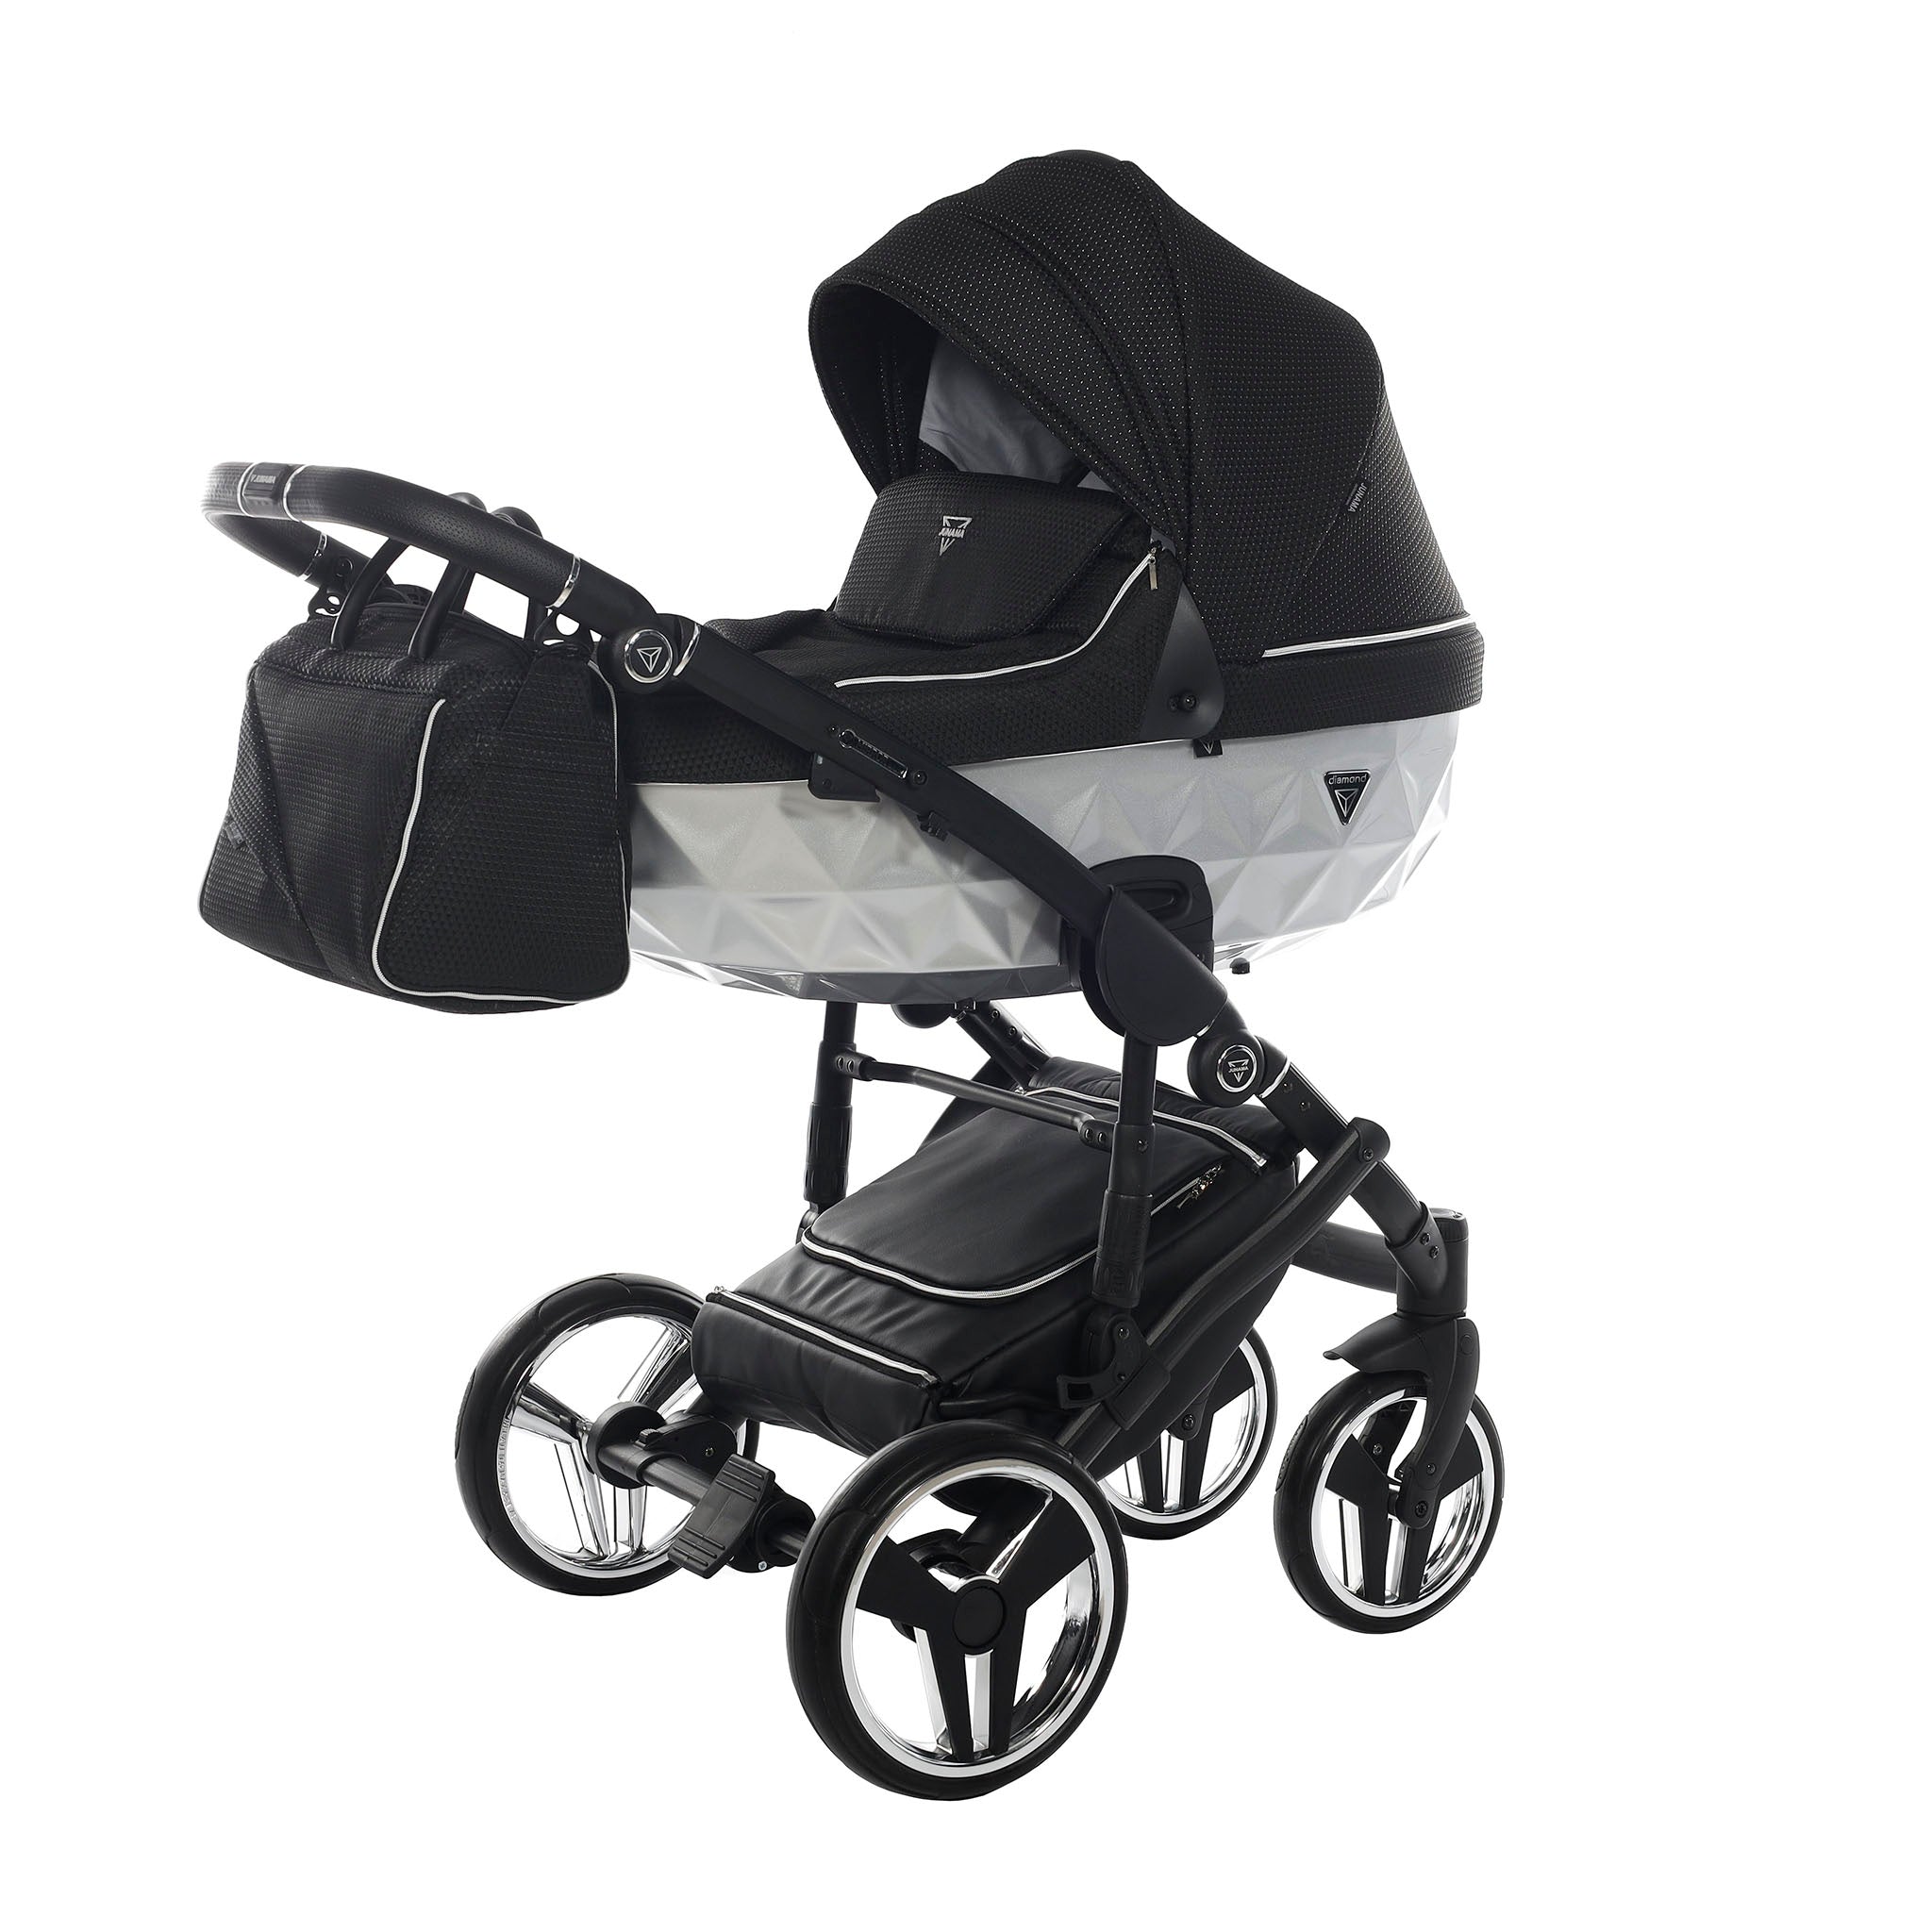 Junama Mirror Satin, baby prams or stroller 2 in 1 - Silver and Black, Code number: JUNMSAT01